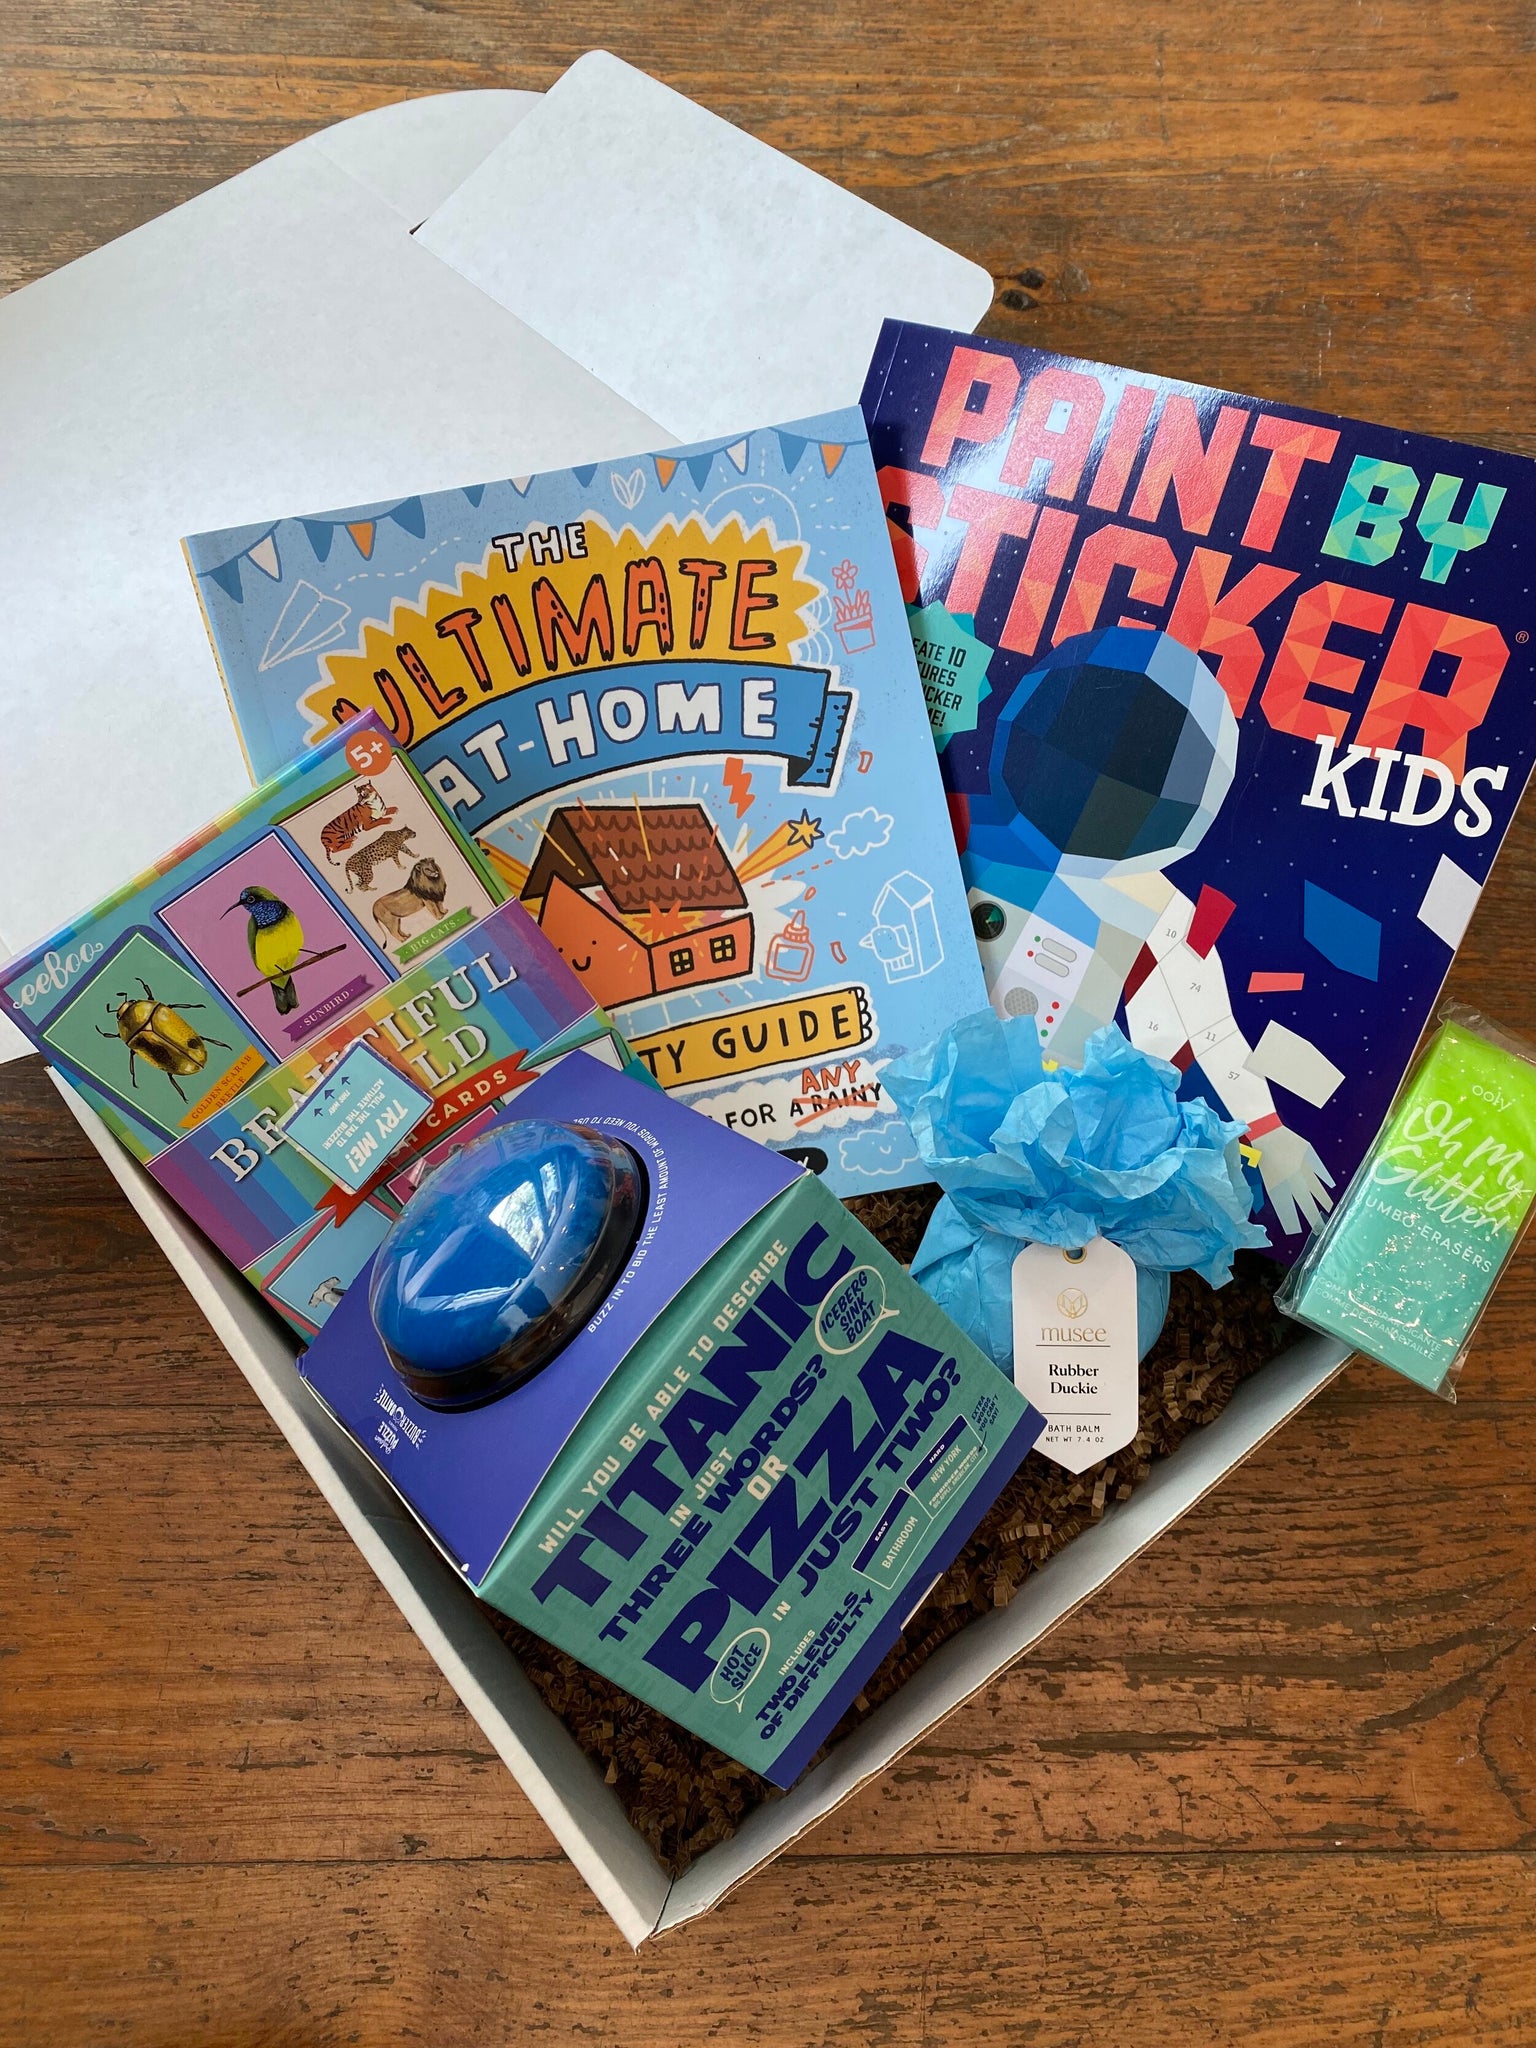 The Bookshelf Surprise Gift Box - Kid's